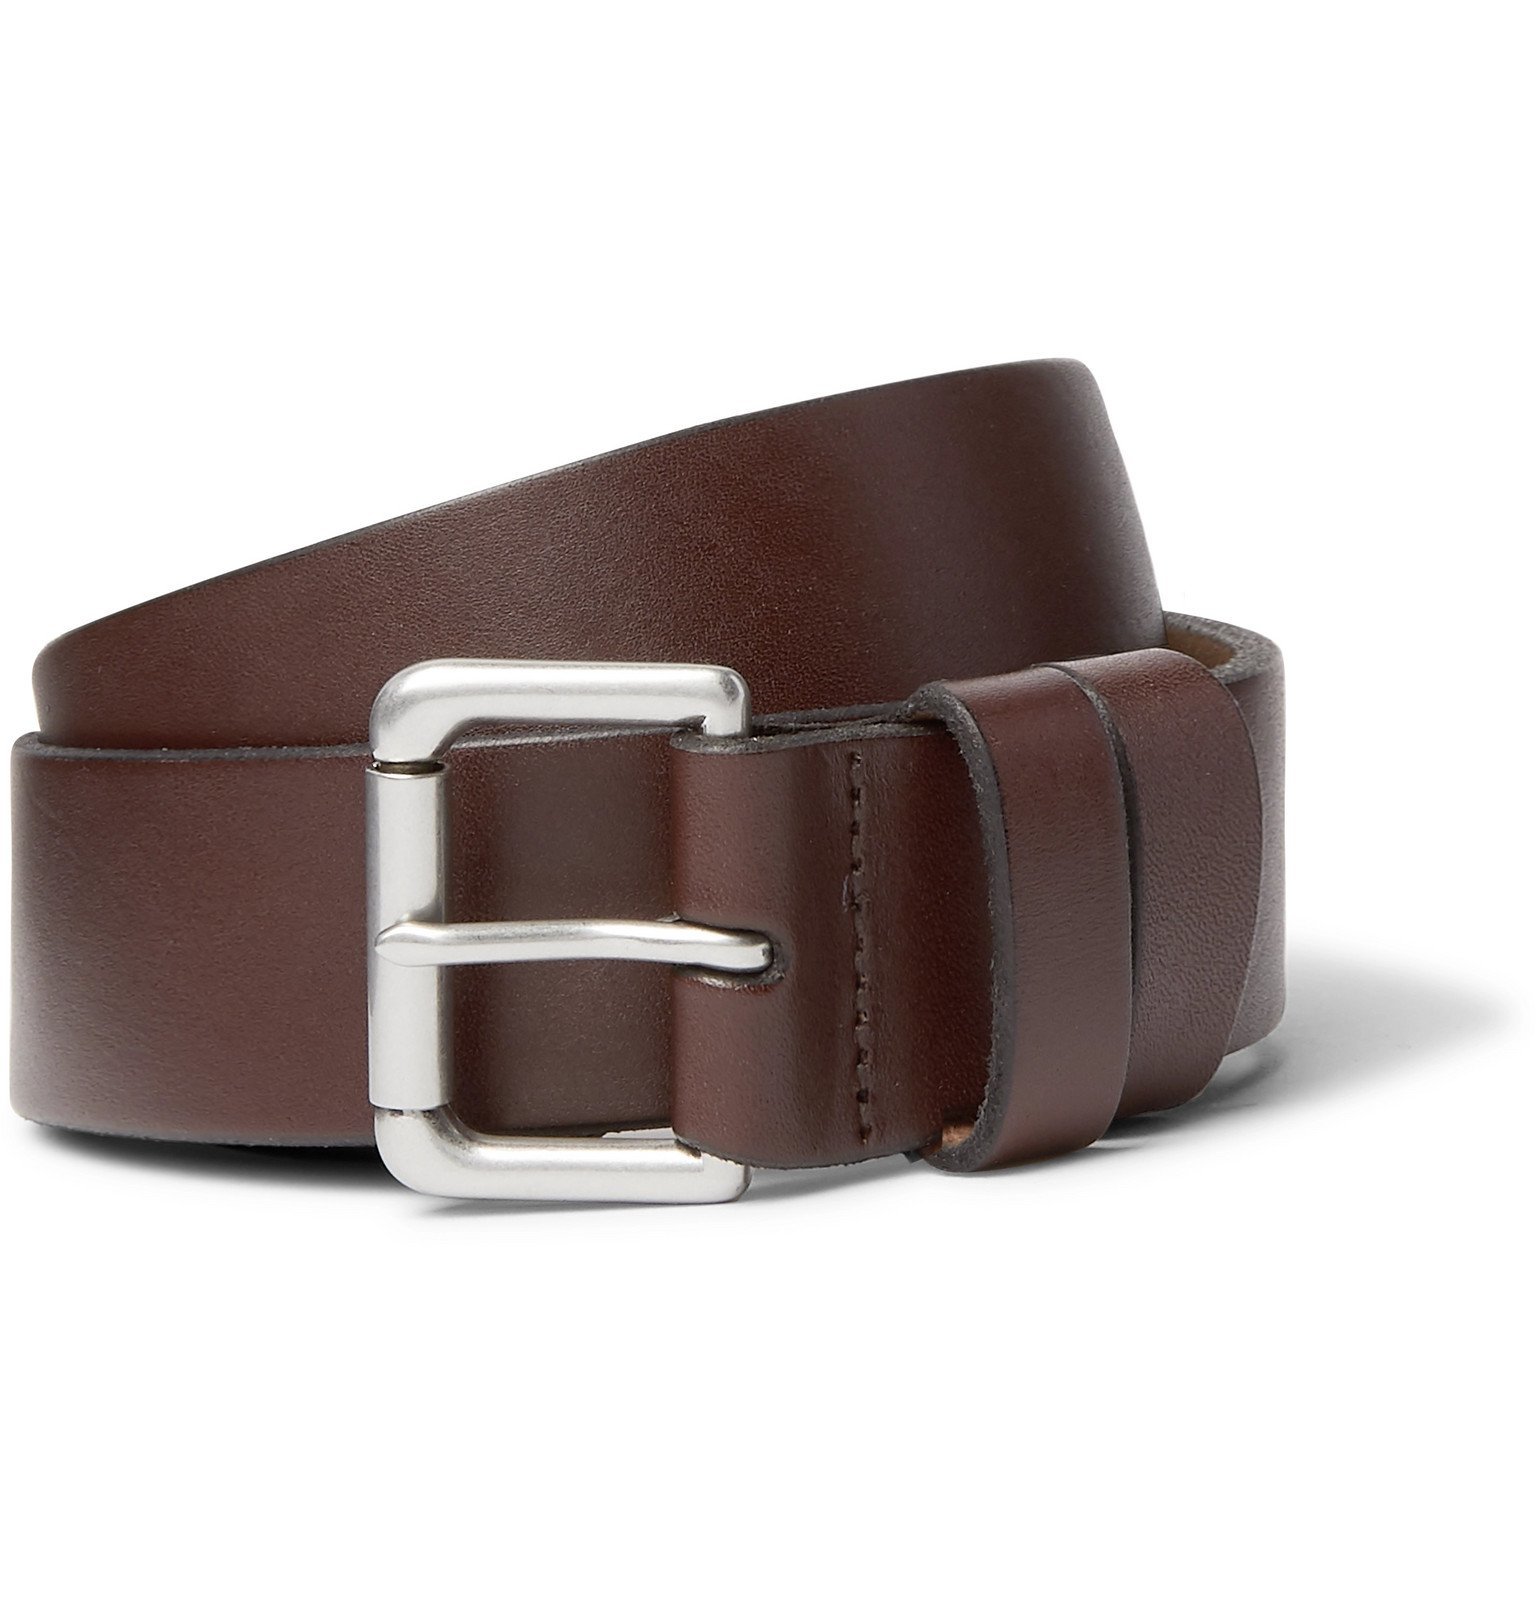 Polo Ralph Lauren - 4cm Brown Leather Belt - Brown Polo Ralph Lauren